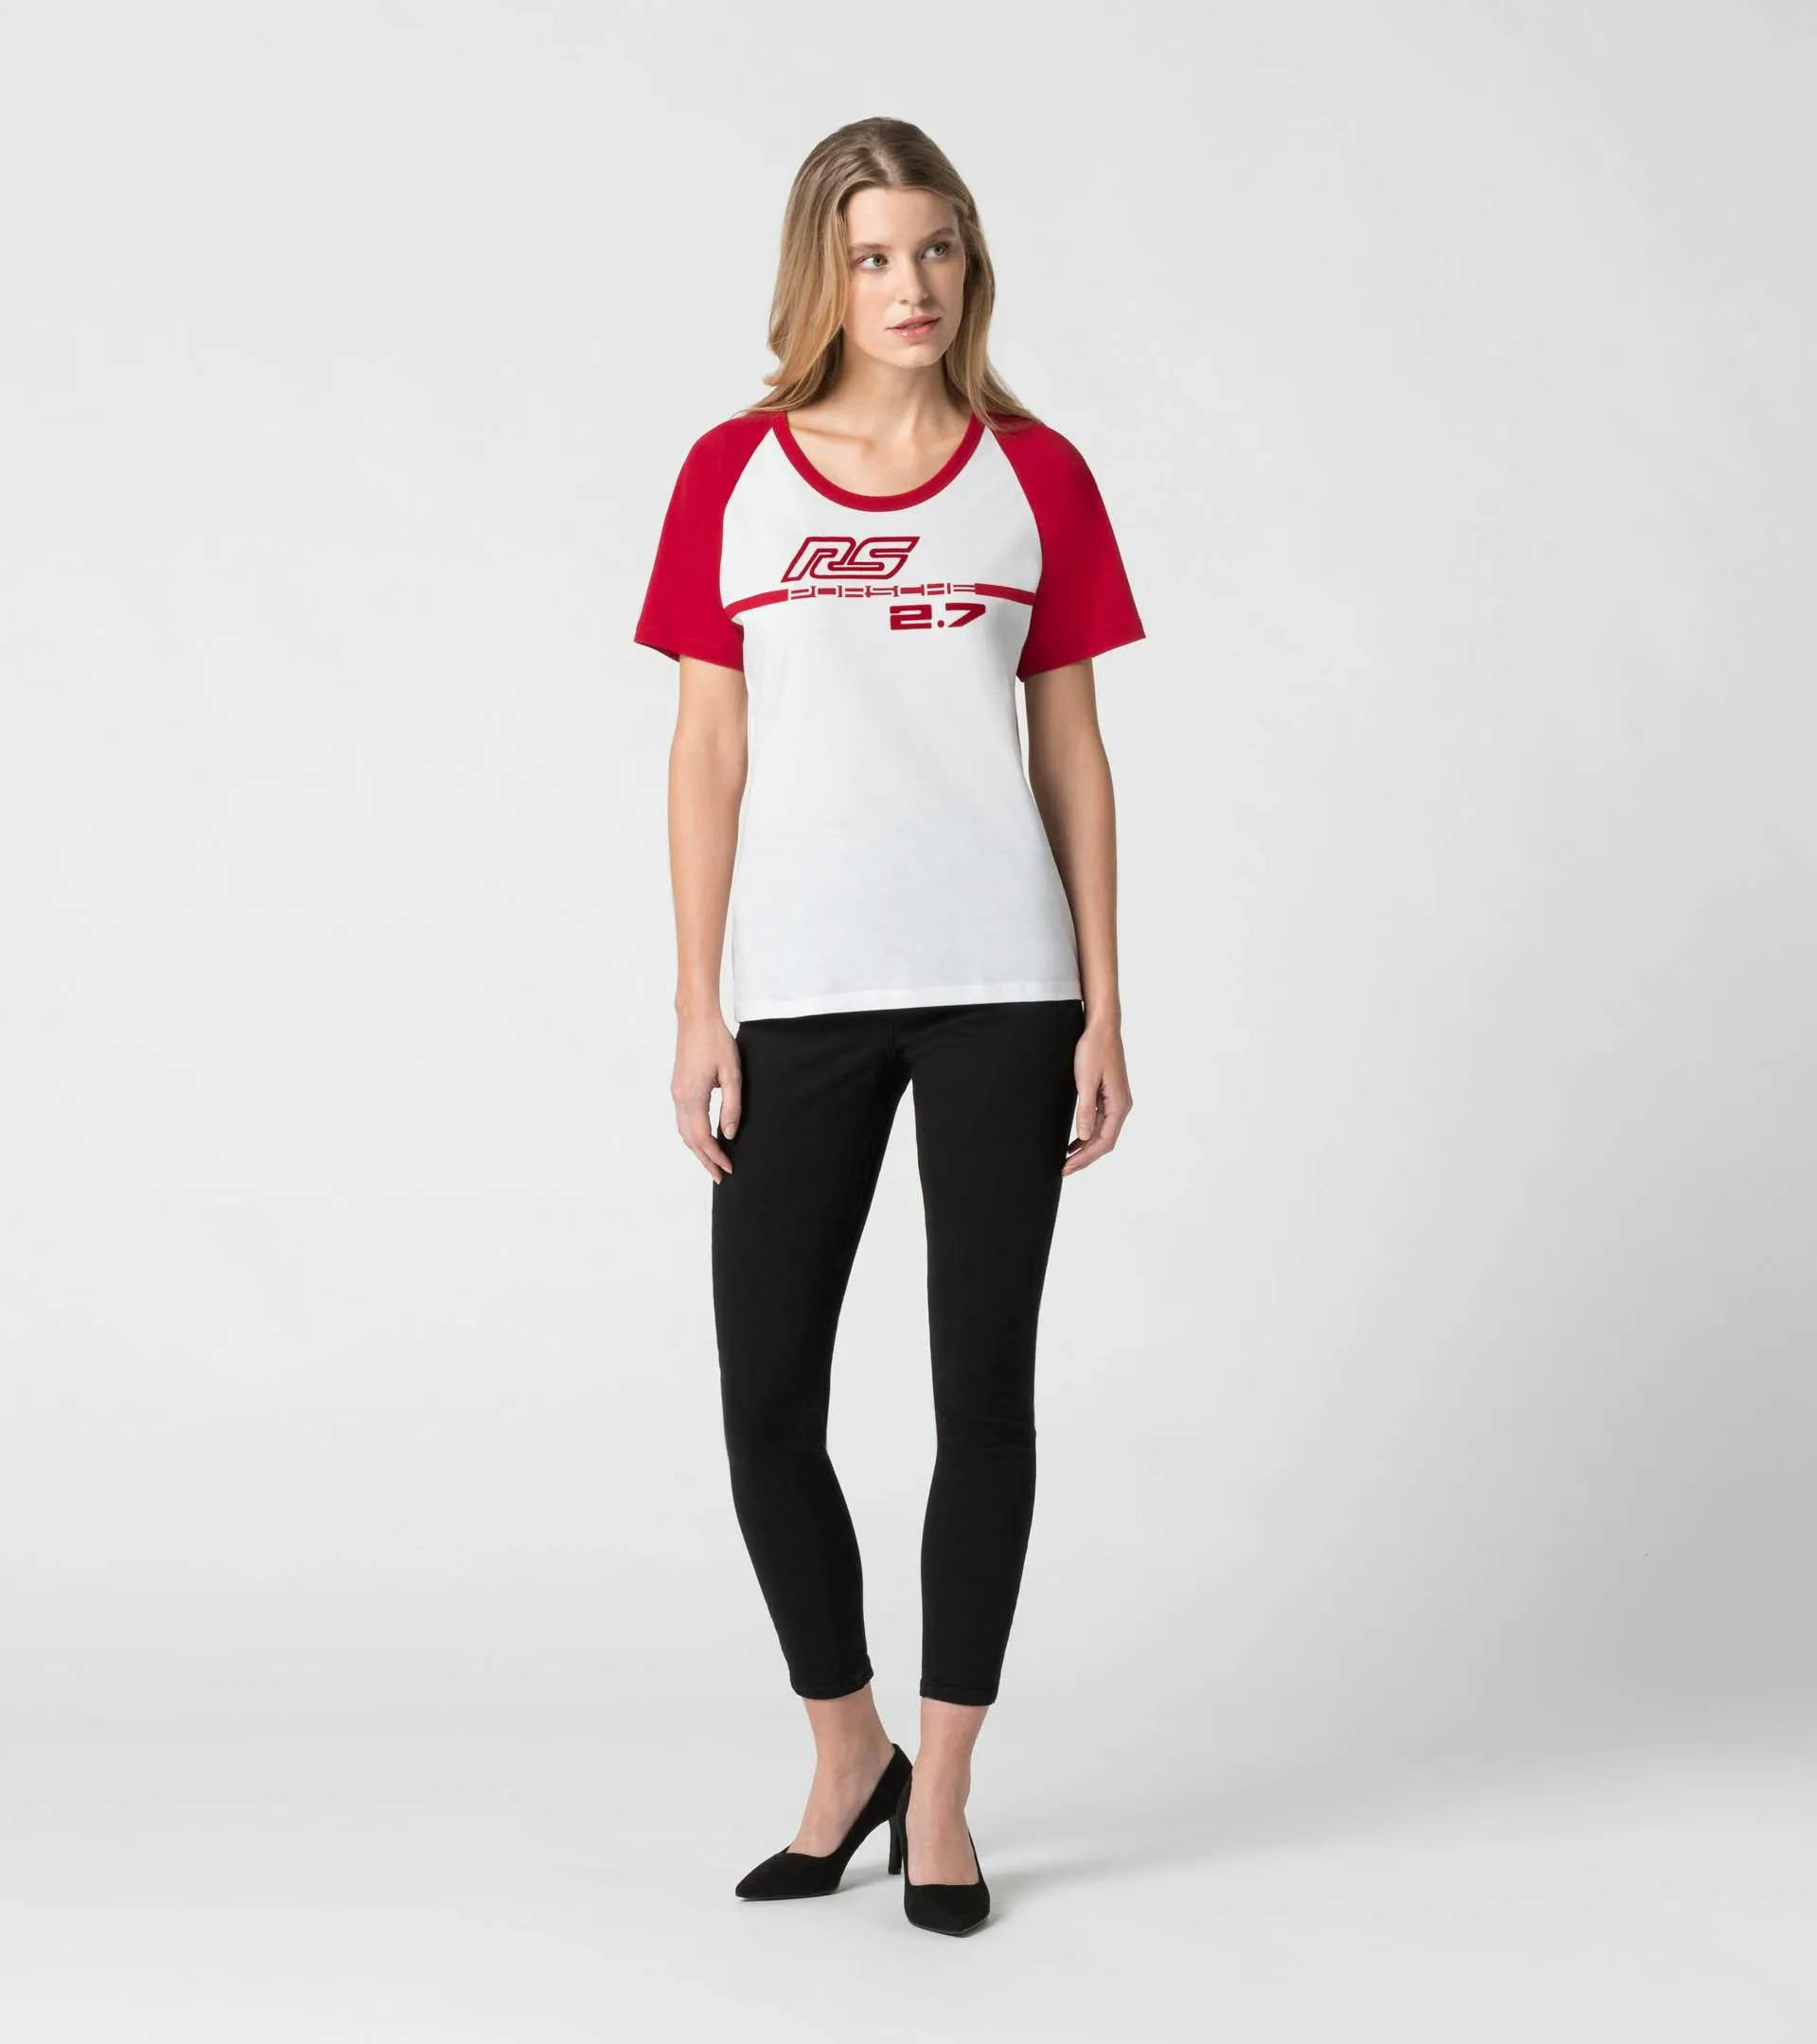 Women's T-shirt – RS 2.7 6